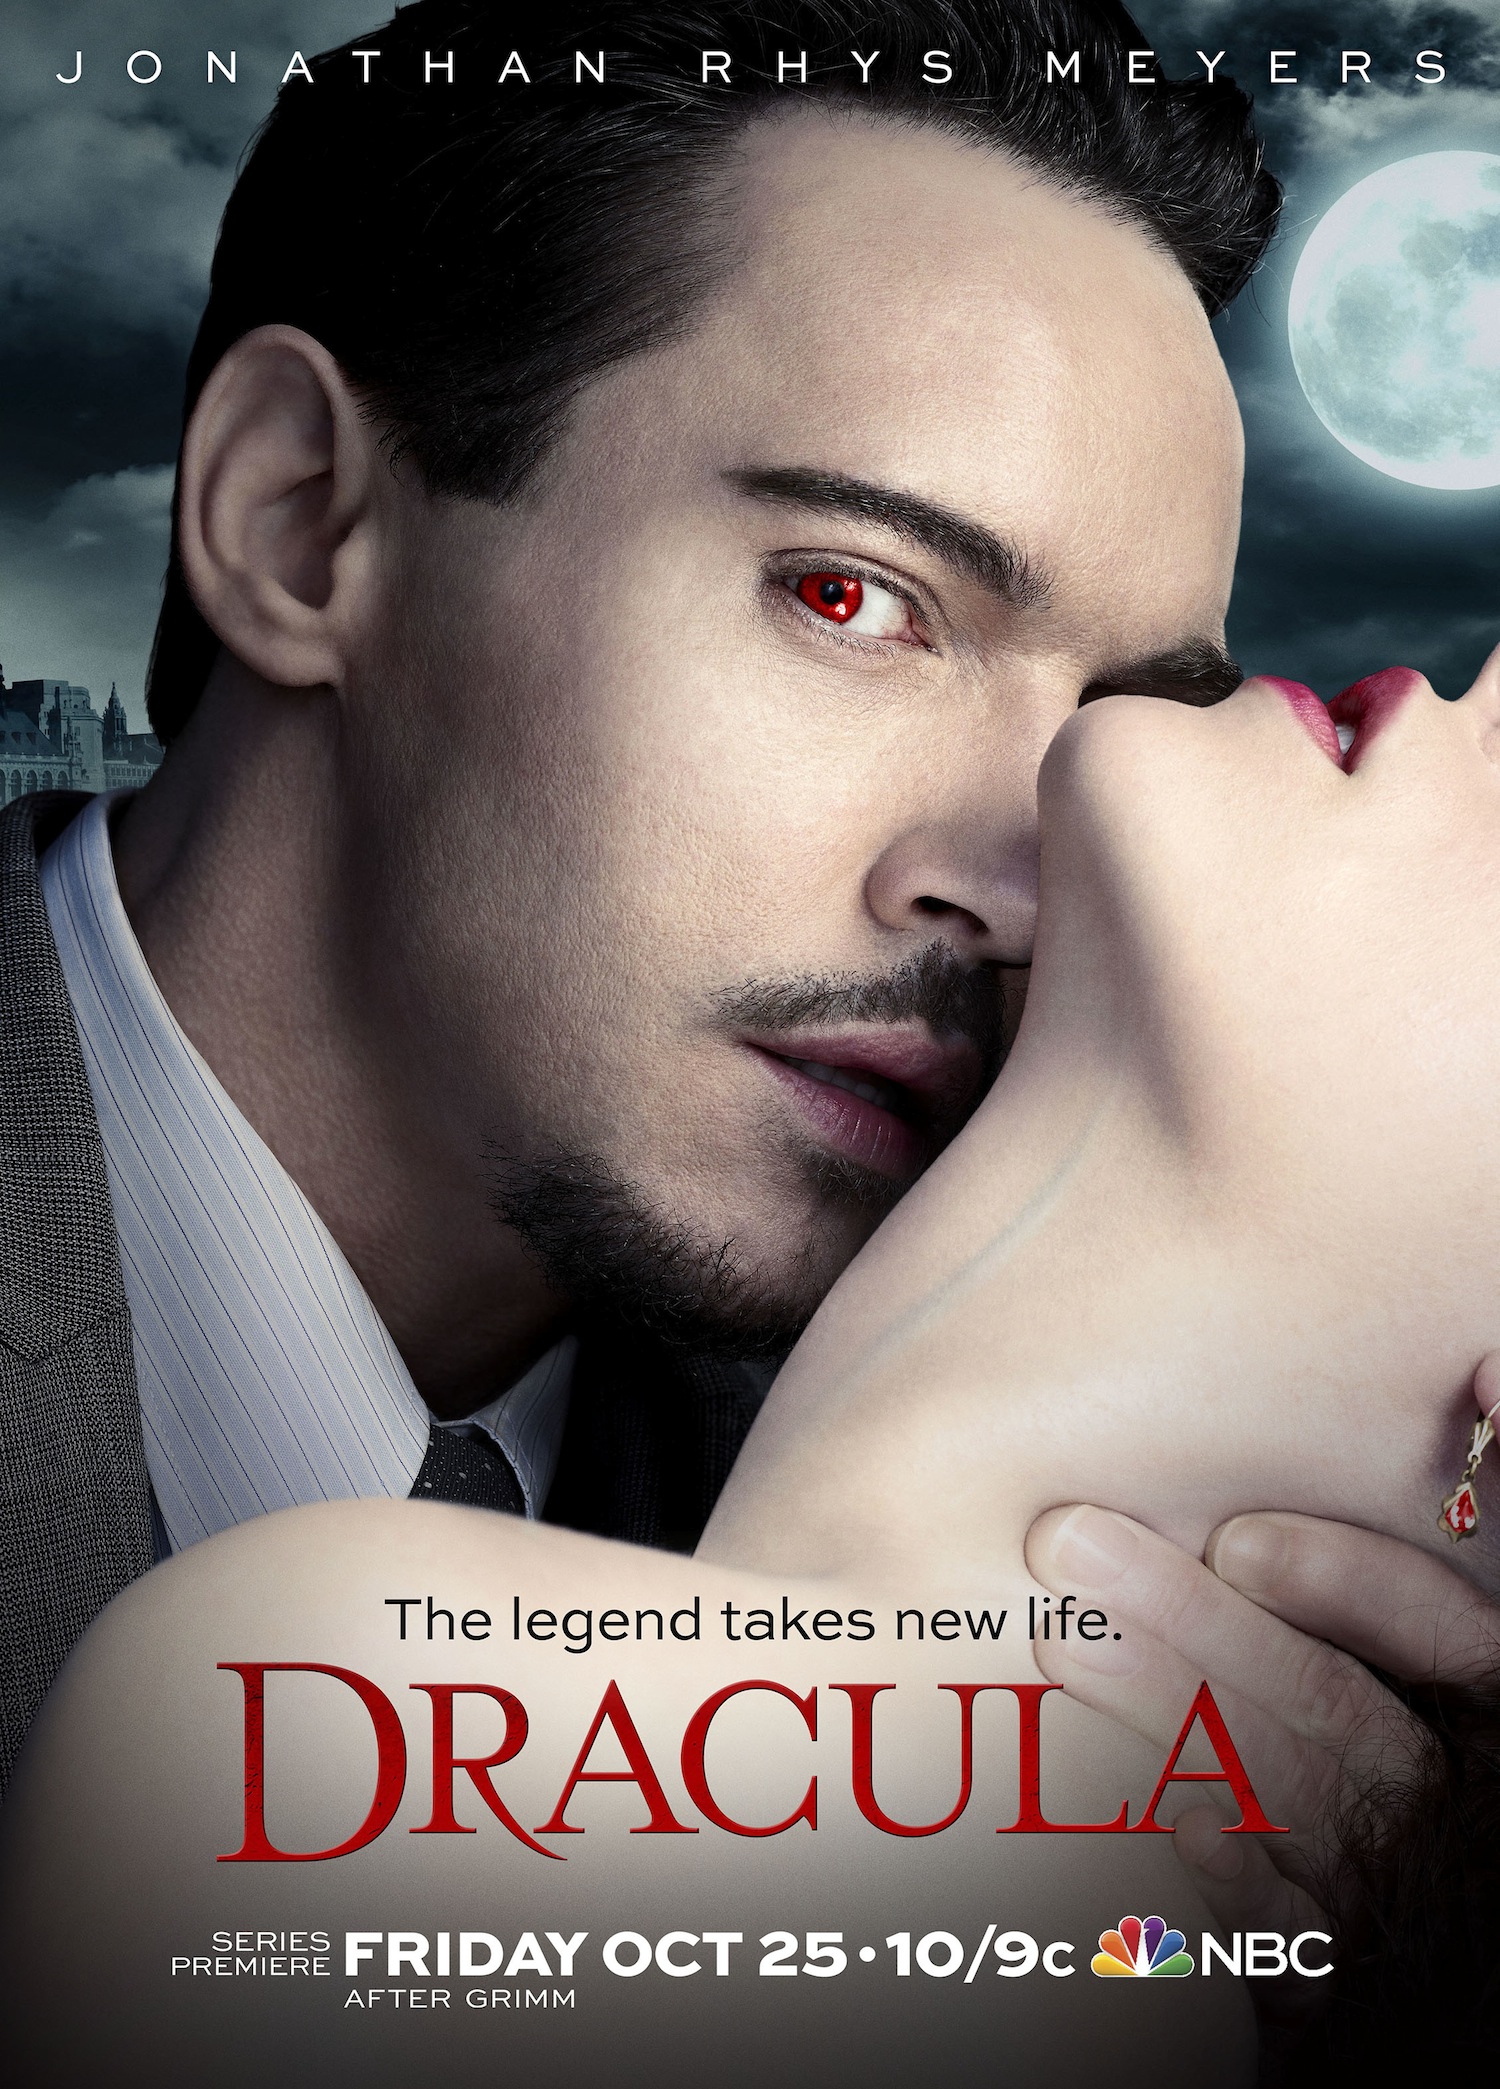 Jonathan Rhys Meyers in Dracula